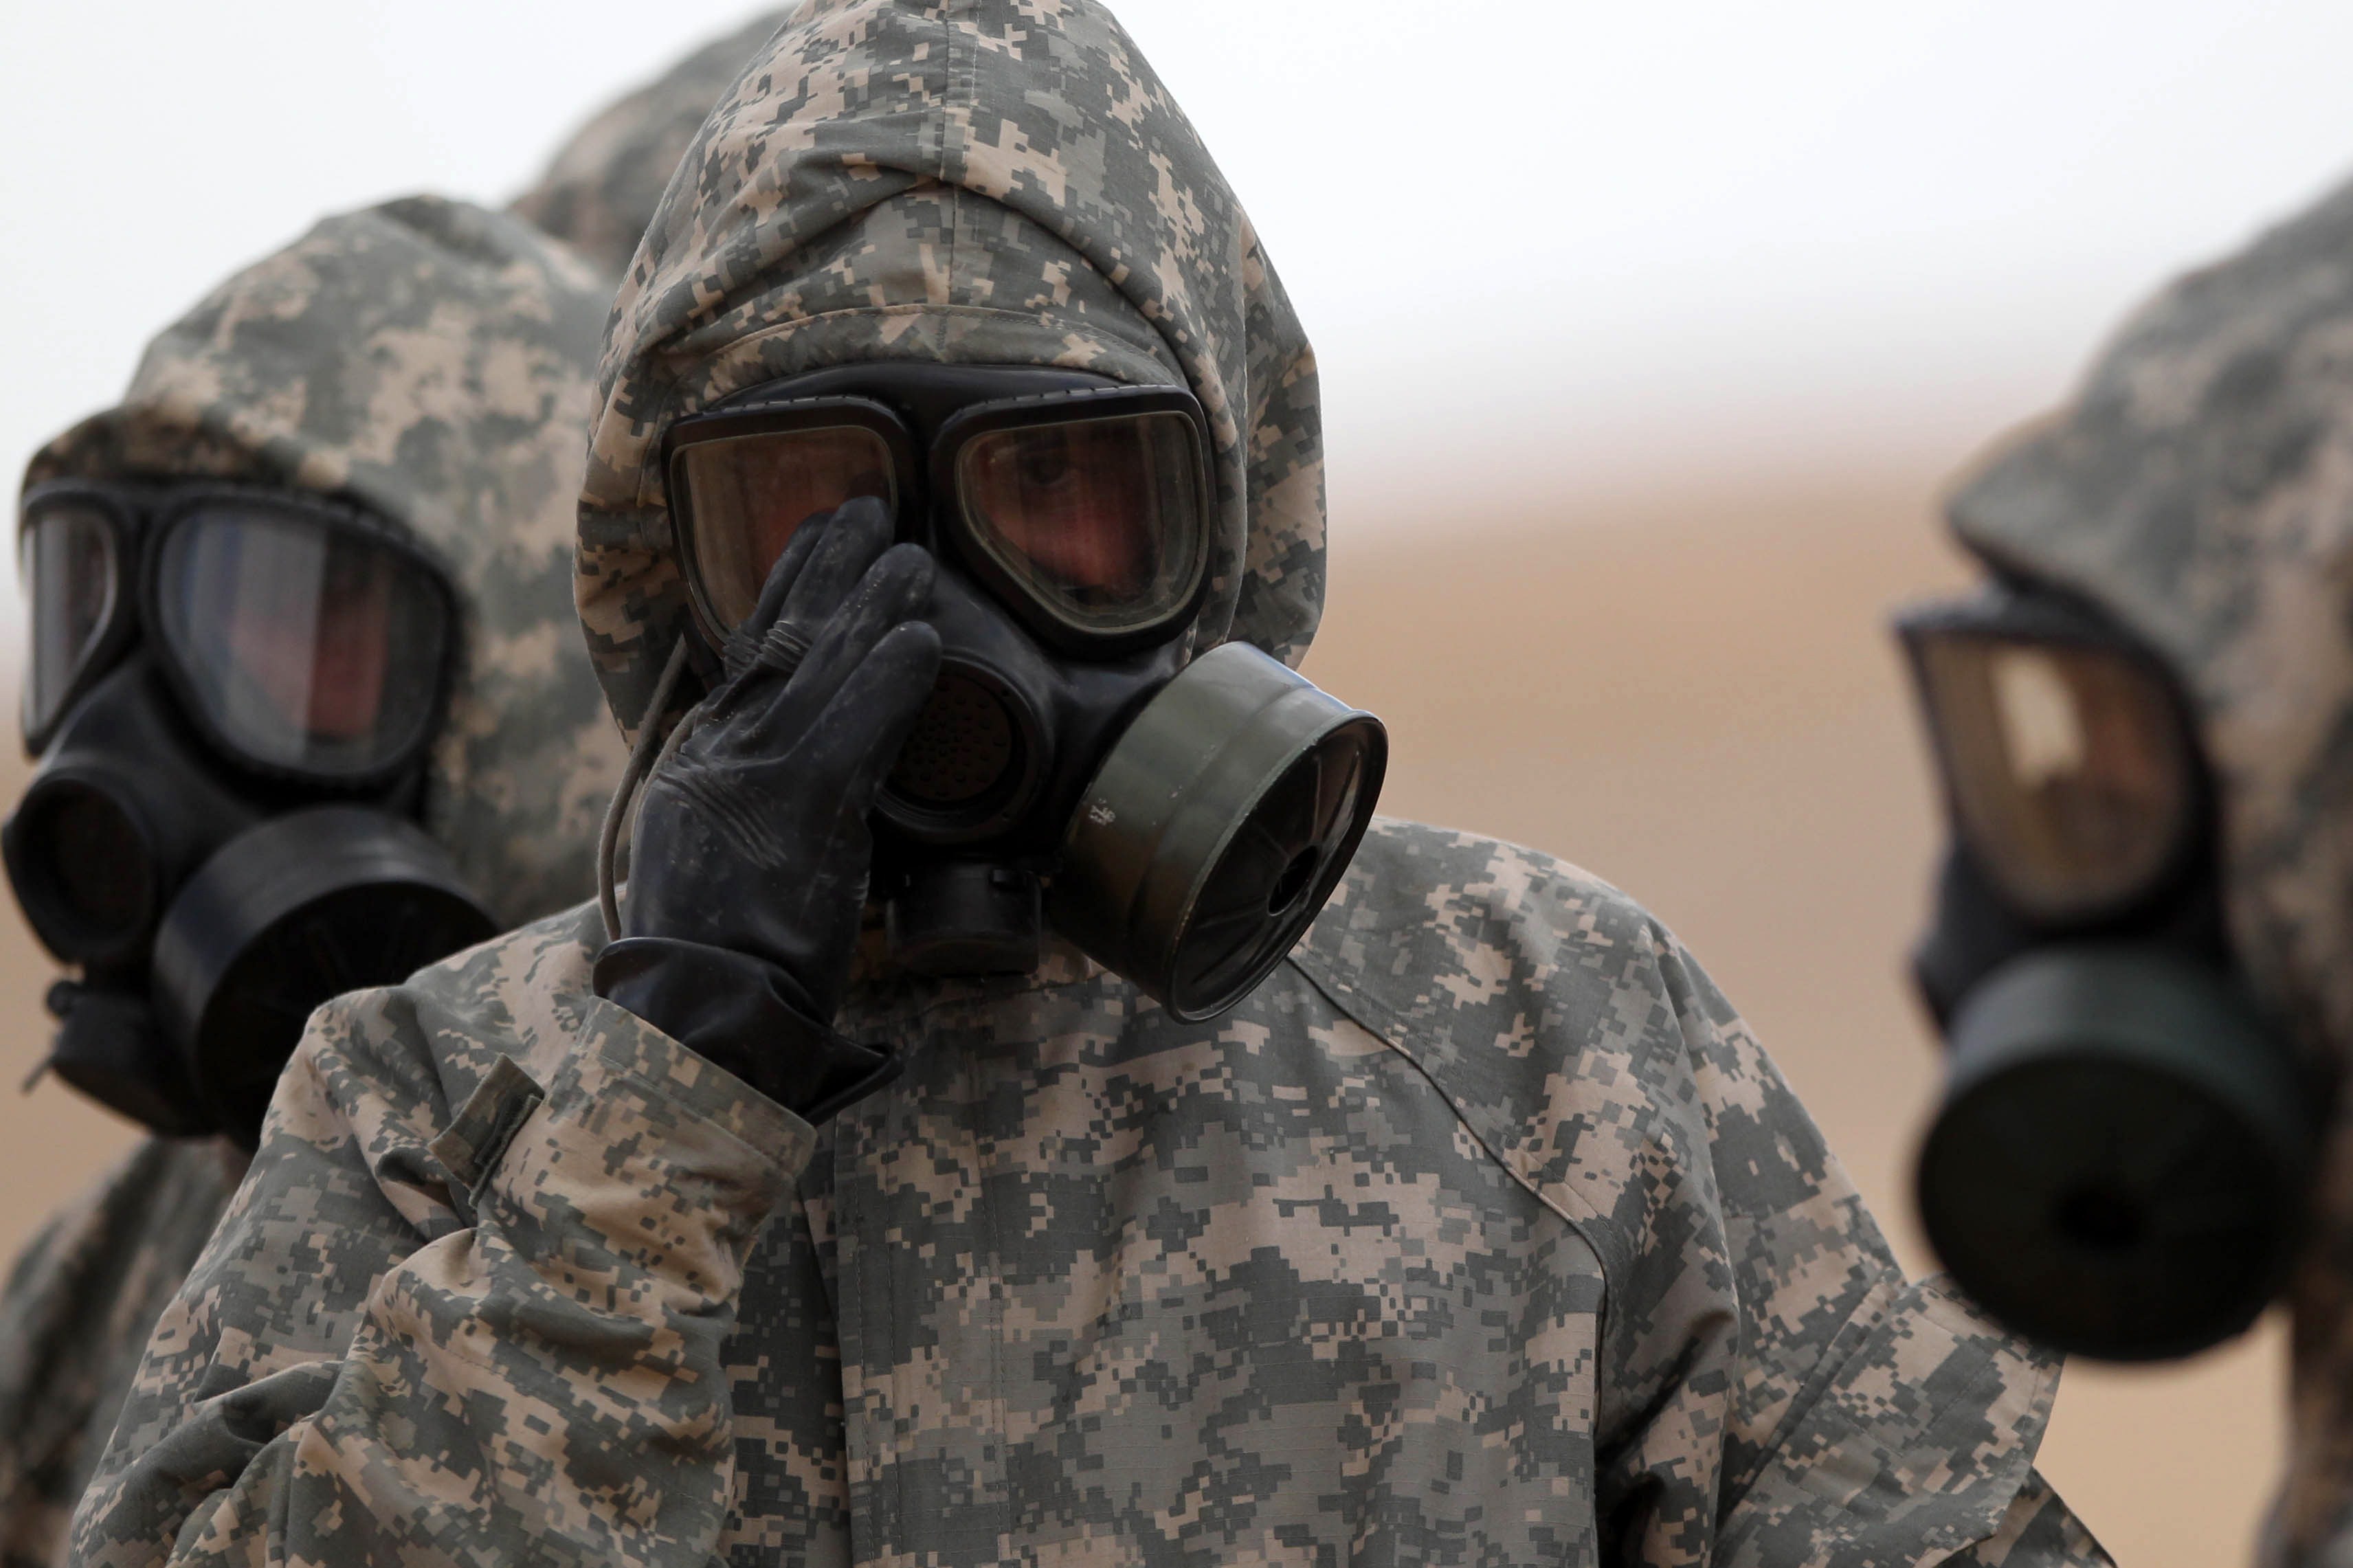 Parlamentarier: Türkei liefert chemischen Kampfstoff an IS